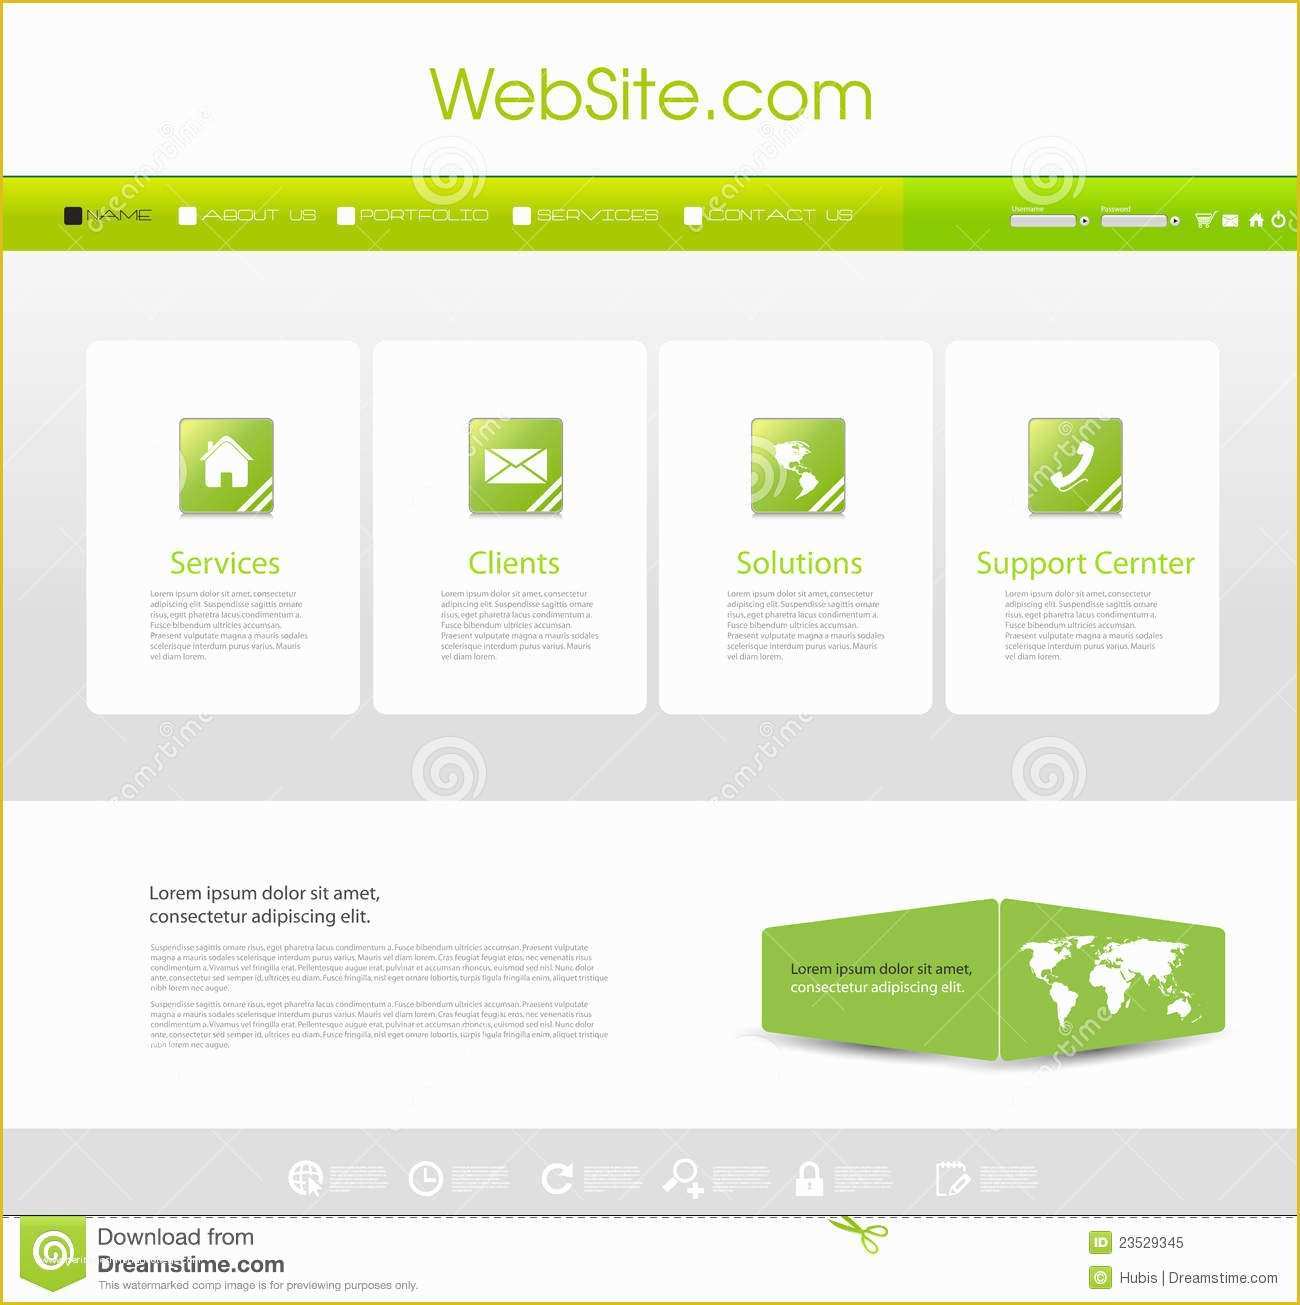 Copyright Free Website Templates Of Website Menu Template Stock Vector Illustration Of Line